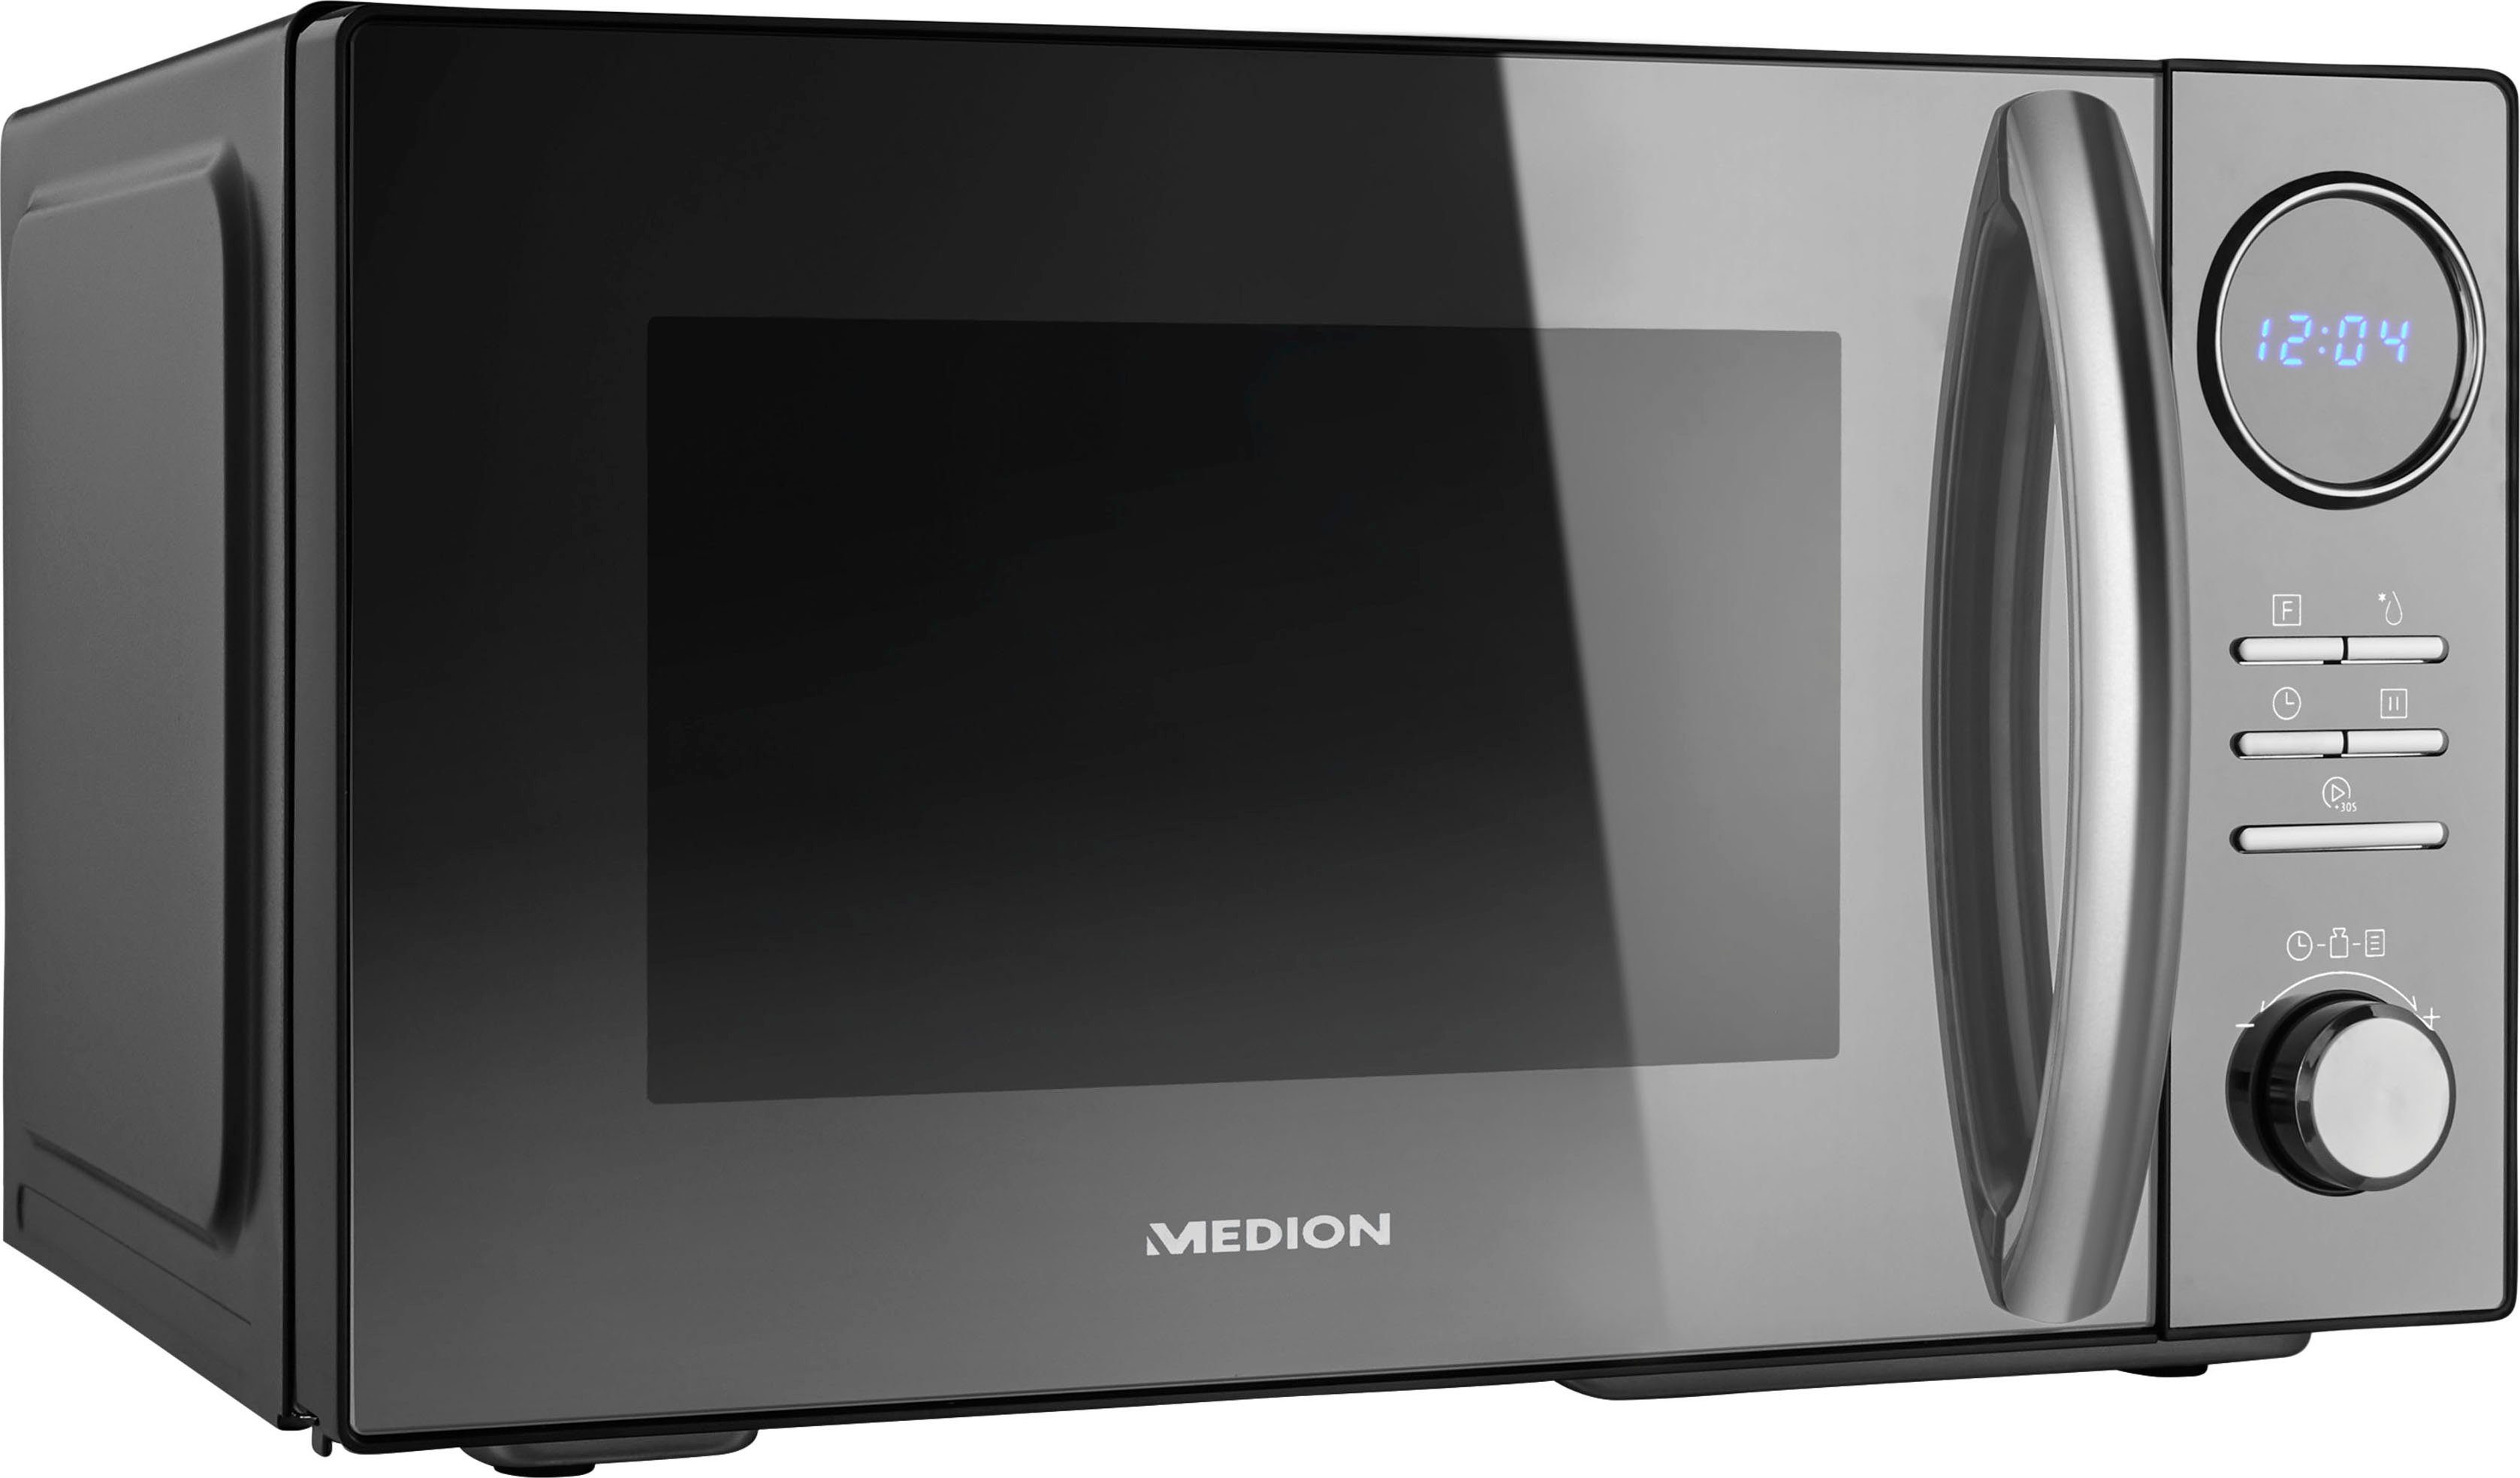 Medion® Mikrowelle MD 11493, Grill und Heißluft, Mikrowelle, 23 l | Mikrowellen